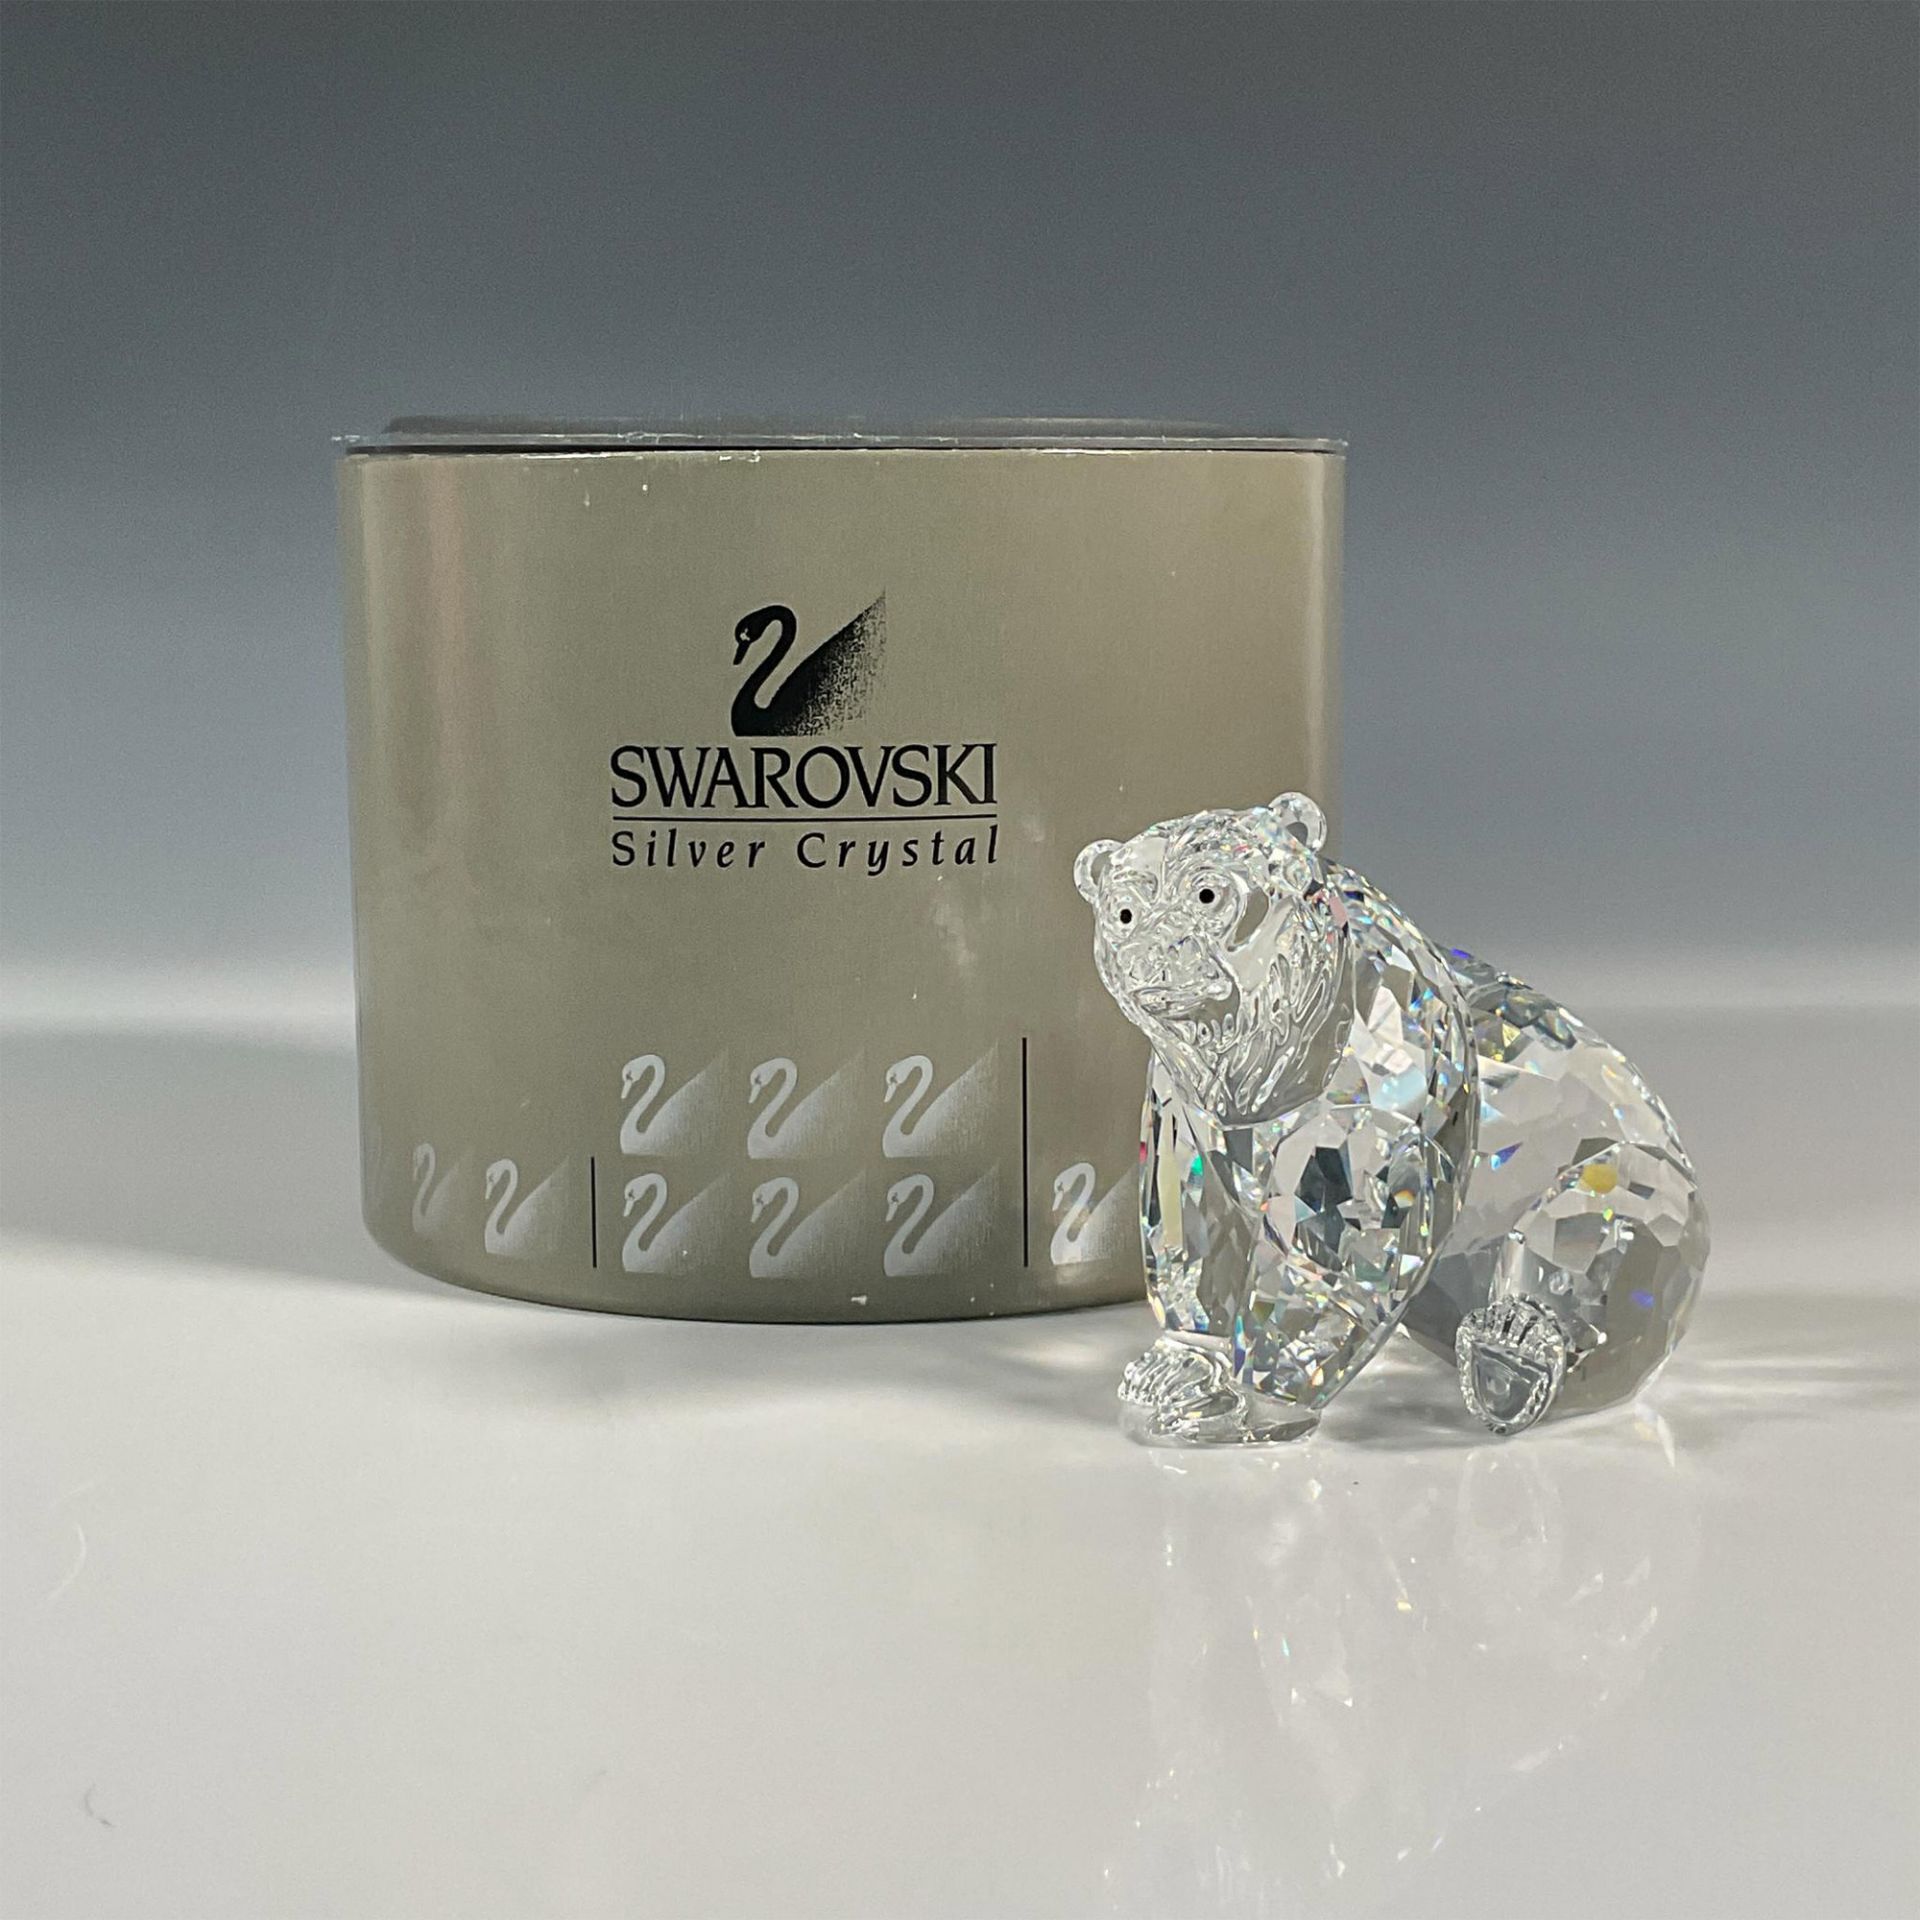 Swarovski Silver Crystal Figurine, Grizzly - Image 2 of 4